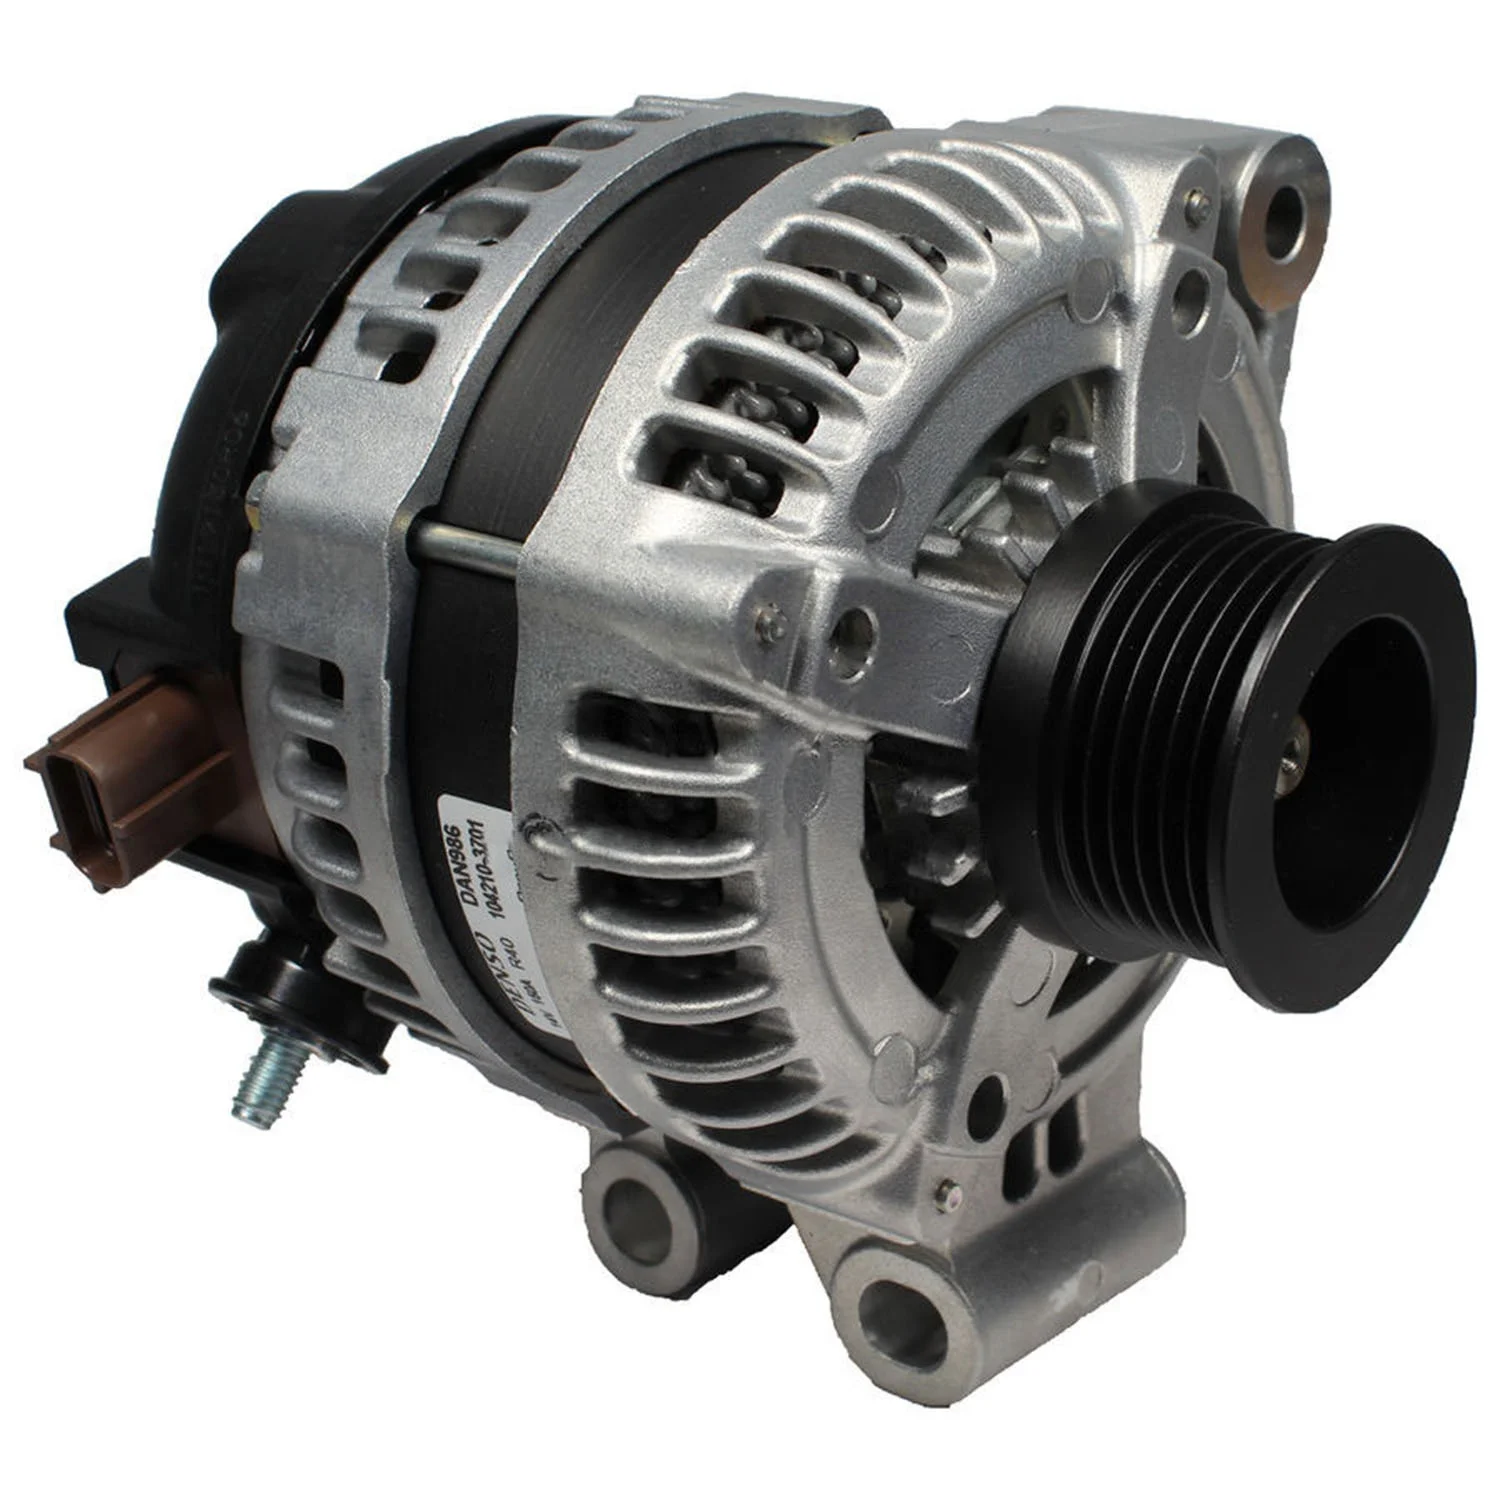 

Auto Dynamo Alternator Generator For Delco DENS Lan Rove Lucas A6043 115928 CAL40308AS DRA0742 DAN986 ALN3711AN ALN3711GB